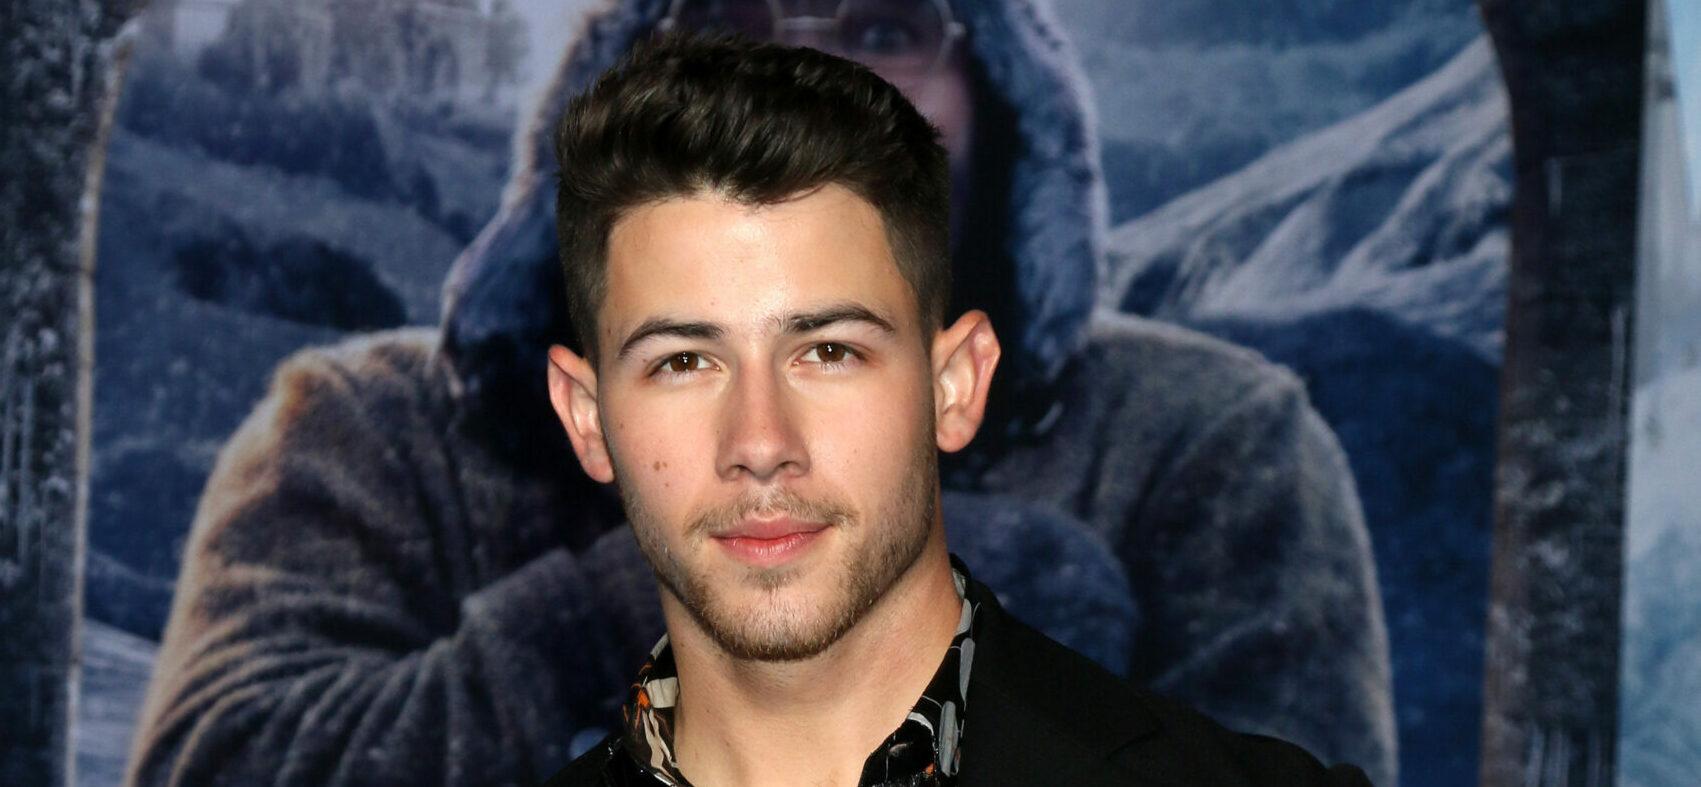 Nick Jonas at "Jumanji: The Next Level" Premiere - Los Angeles